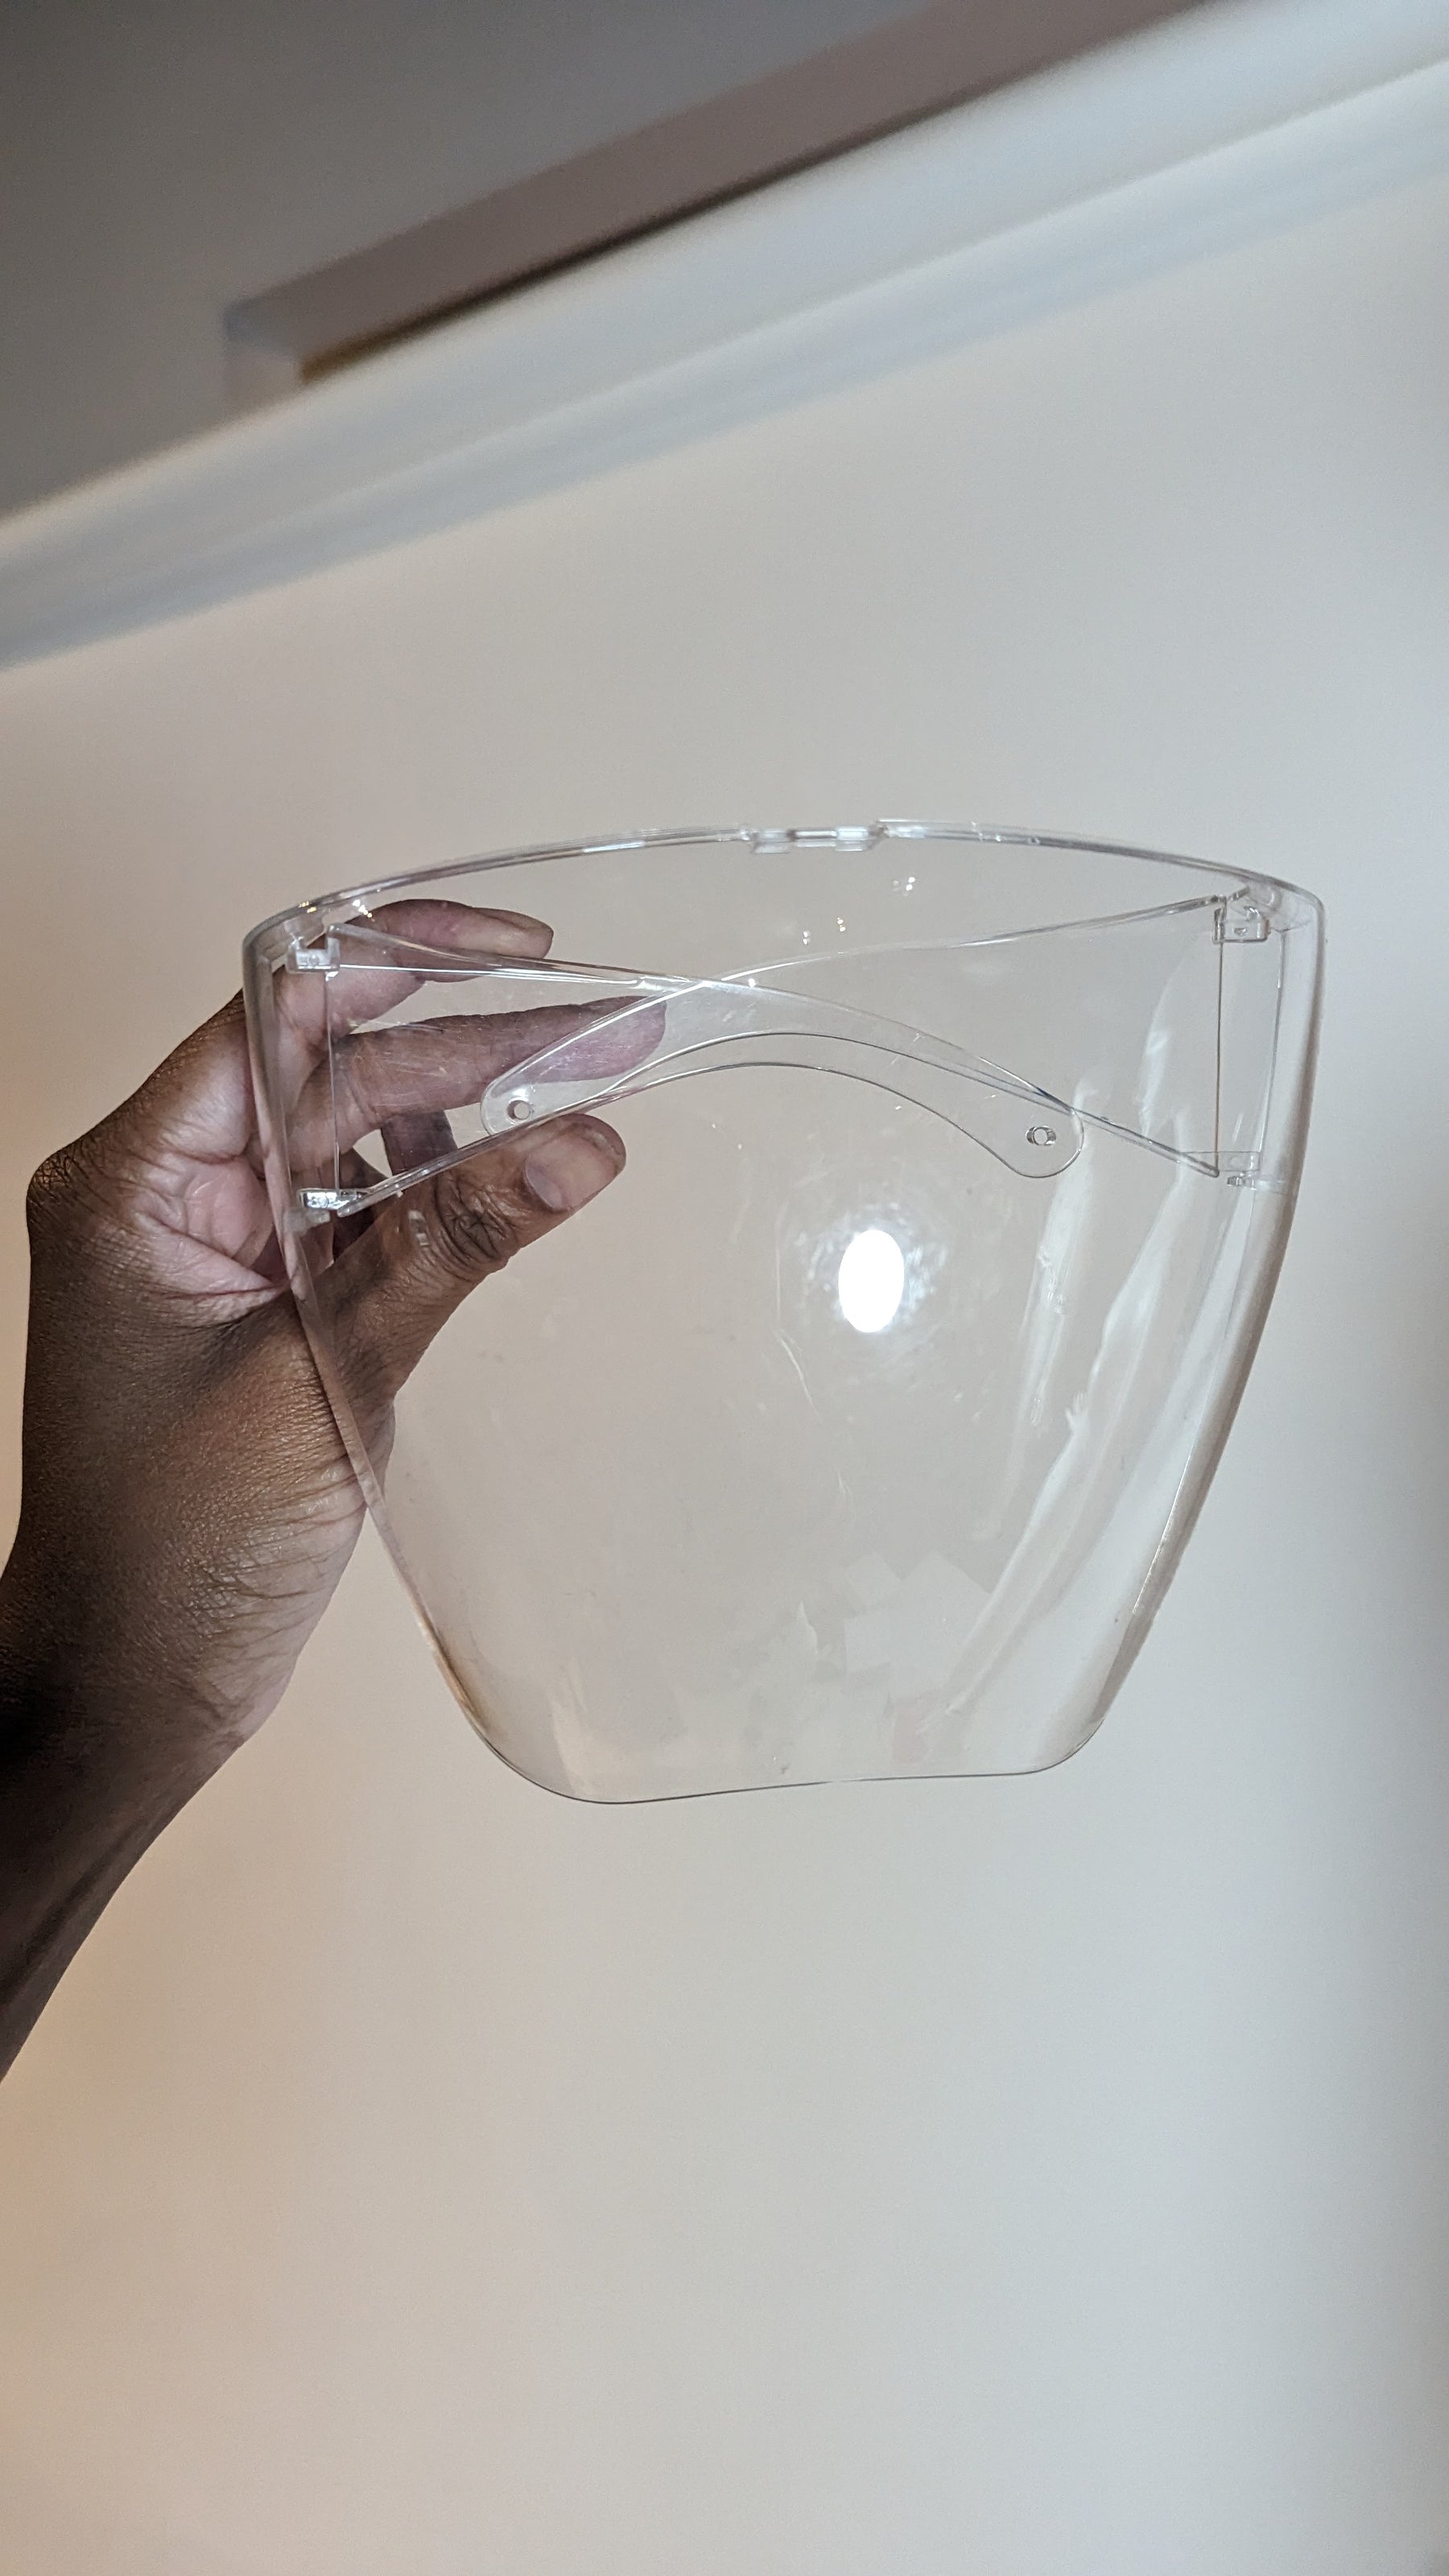 SAMPLE SALE - Clear Plastic Face Shield - FINAL SALE